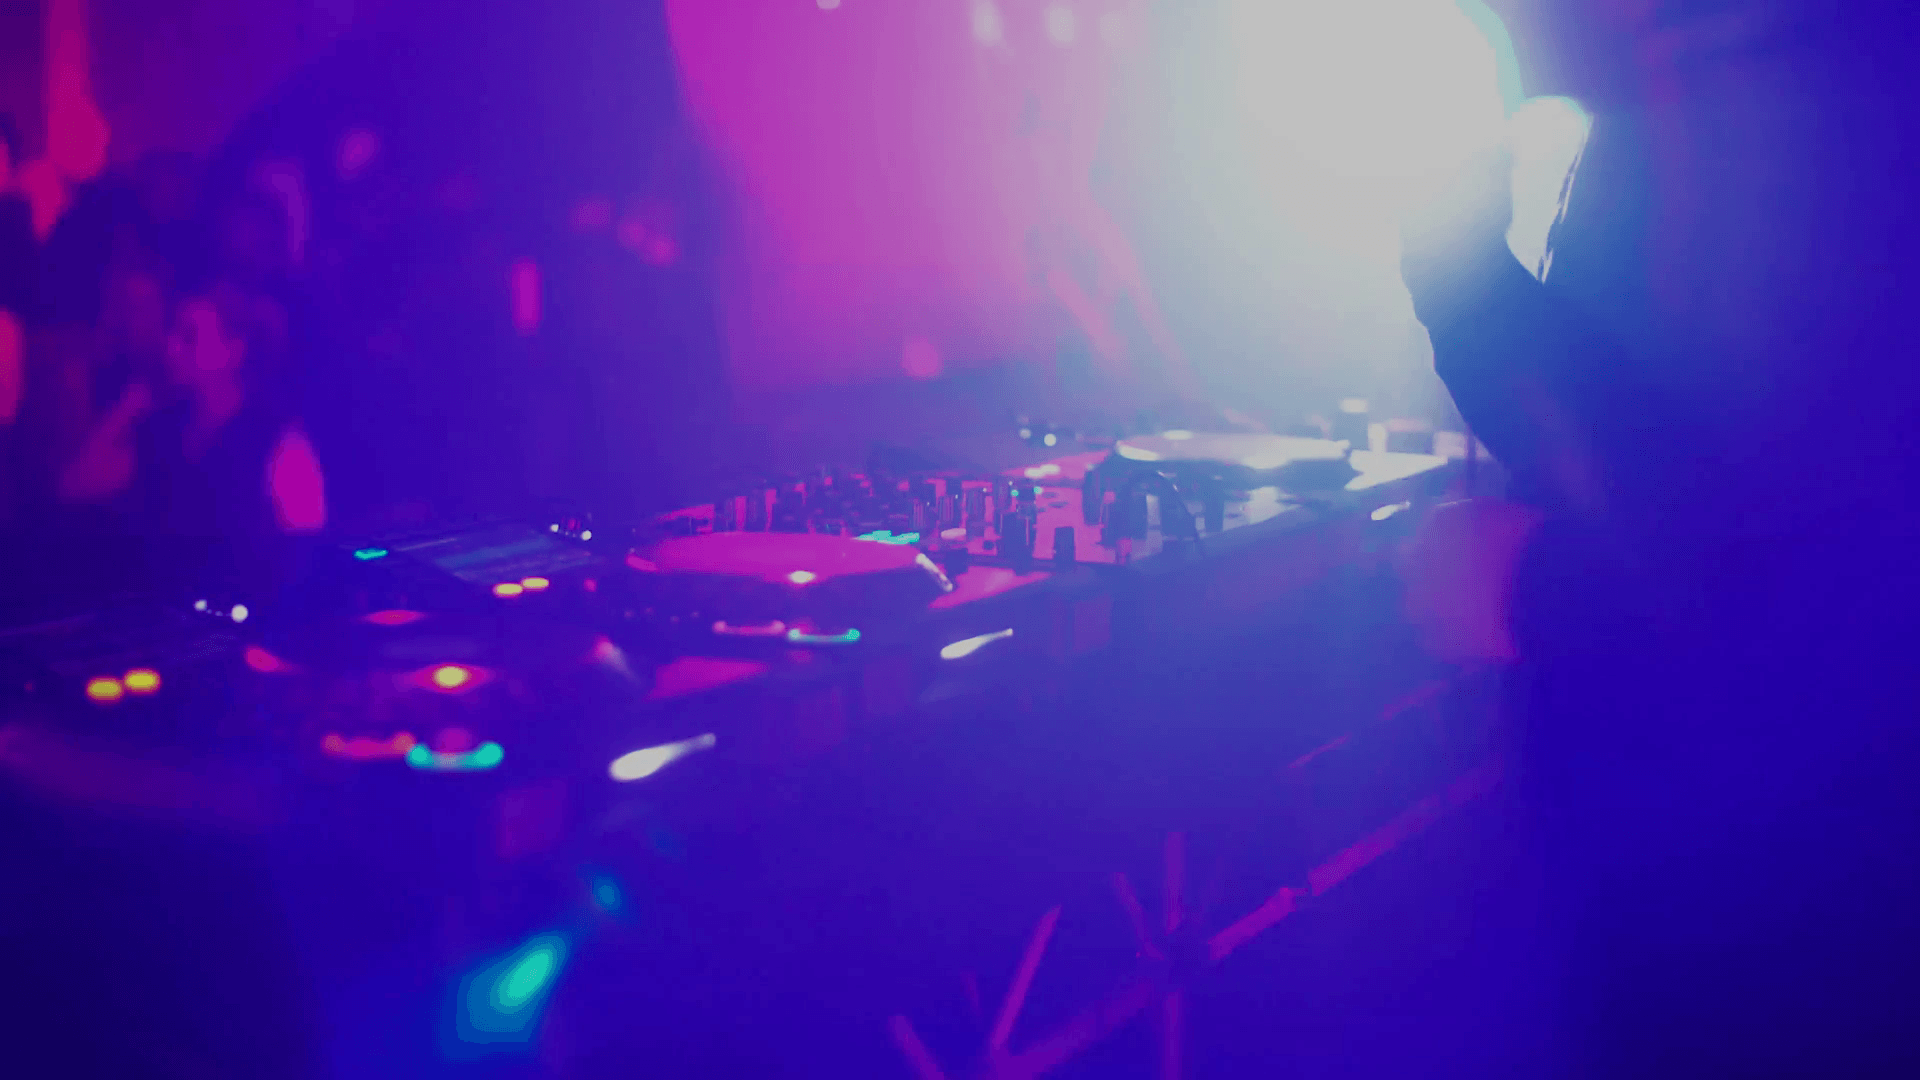 DJ disk jockey mixing songs at his desk turntable in nightclub. Two